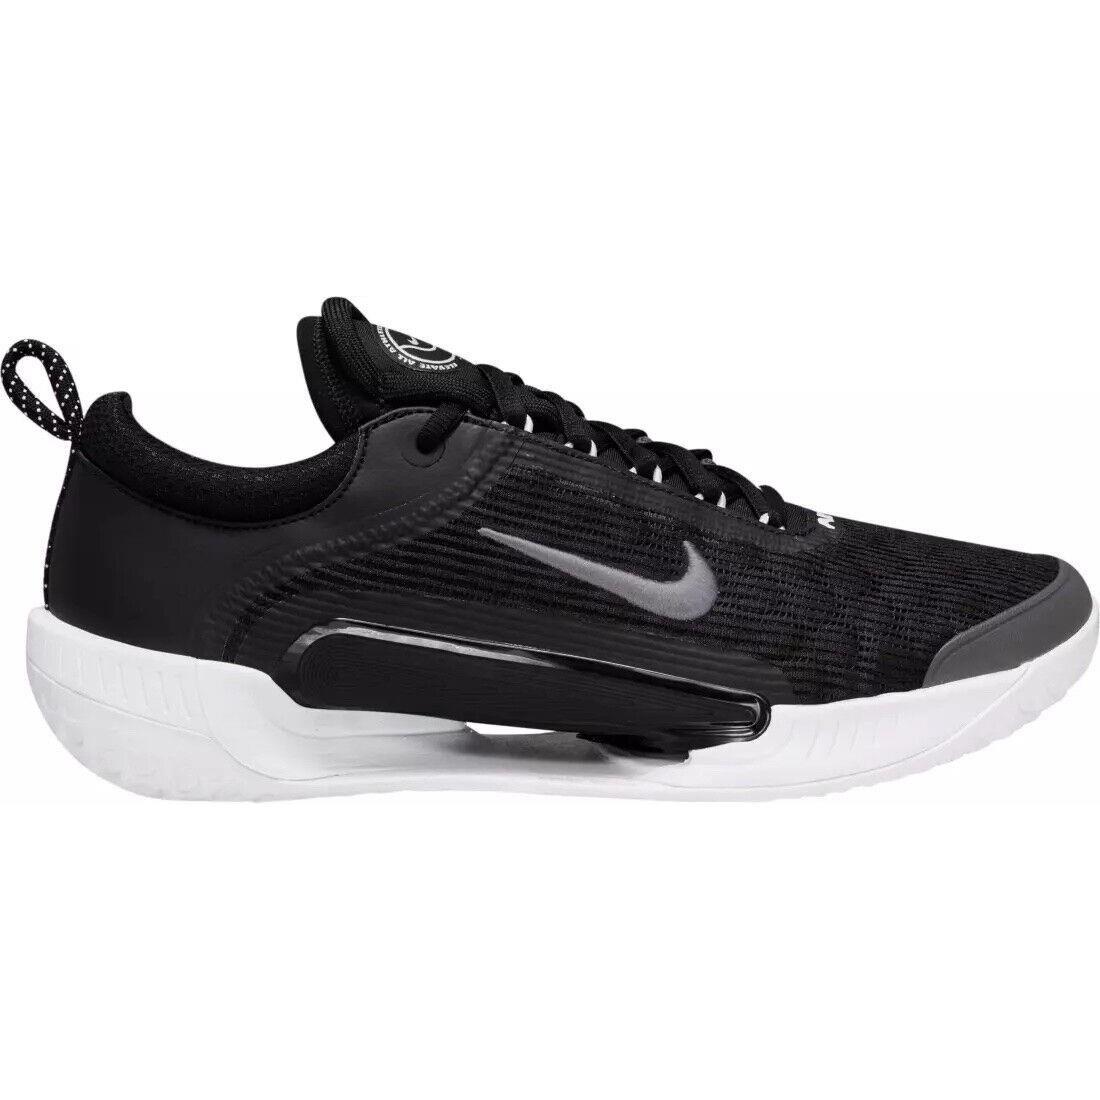 Nikecourt Zoom Nxt `black White` Hard Court Tennis Shoes DH0219-010 SZ 13